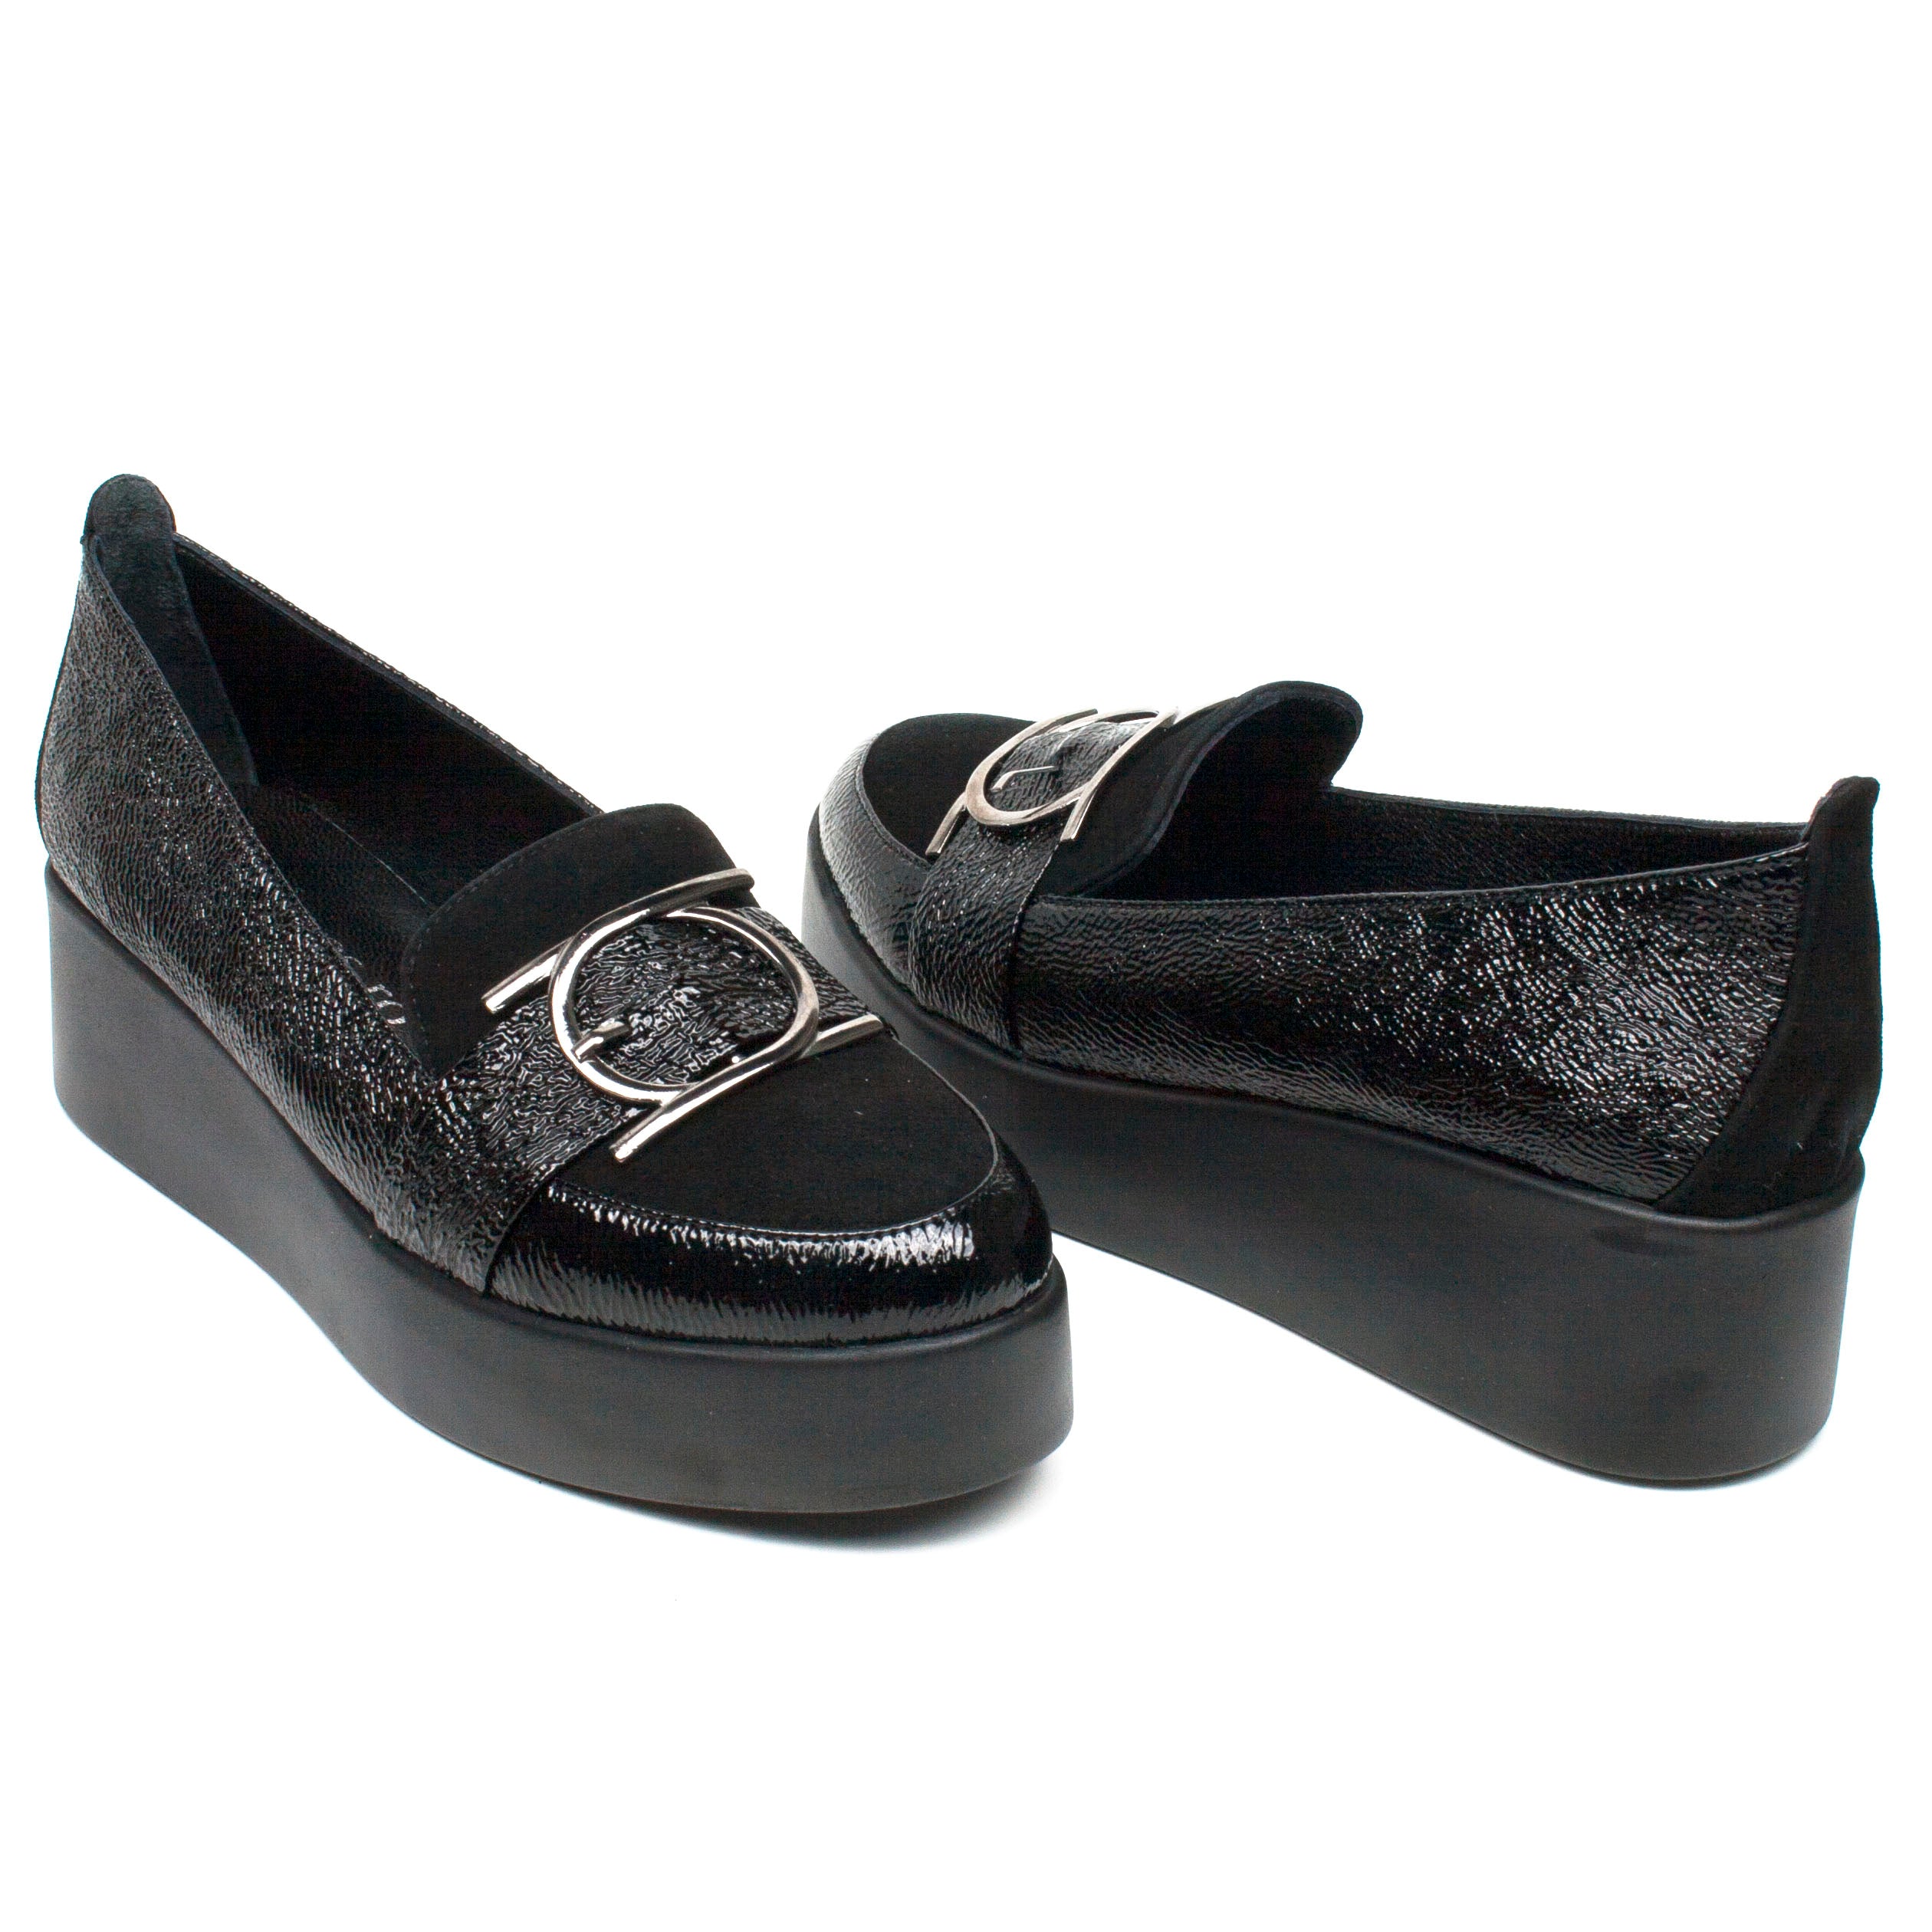 Manos pantofi dama negru ID1776-NG